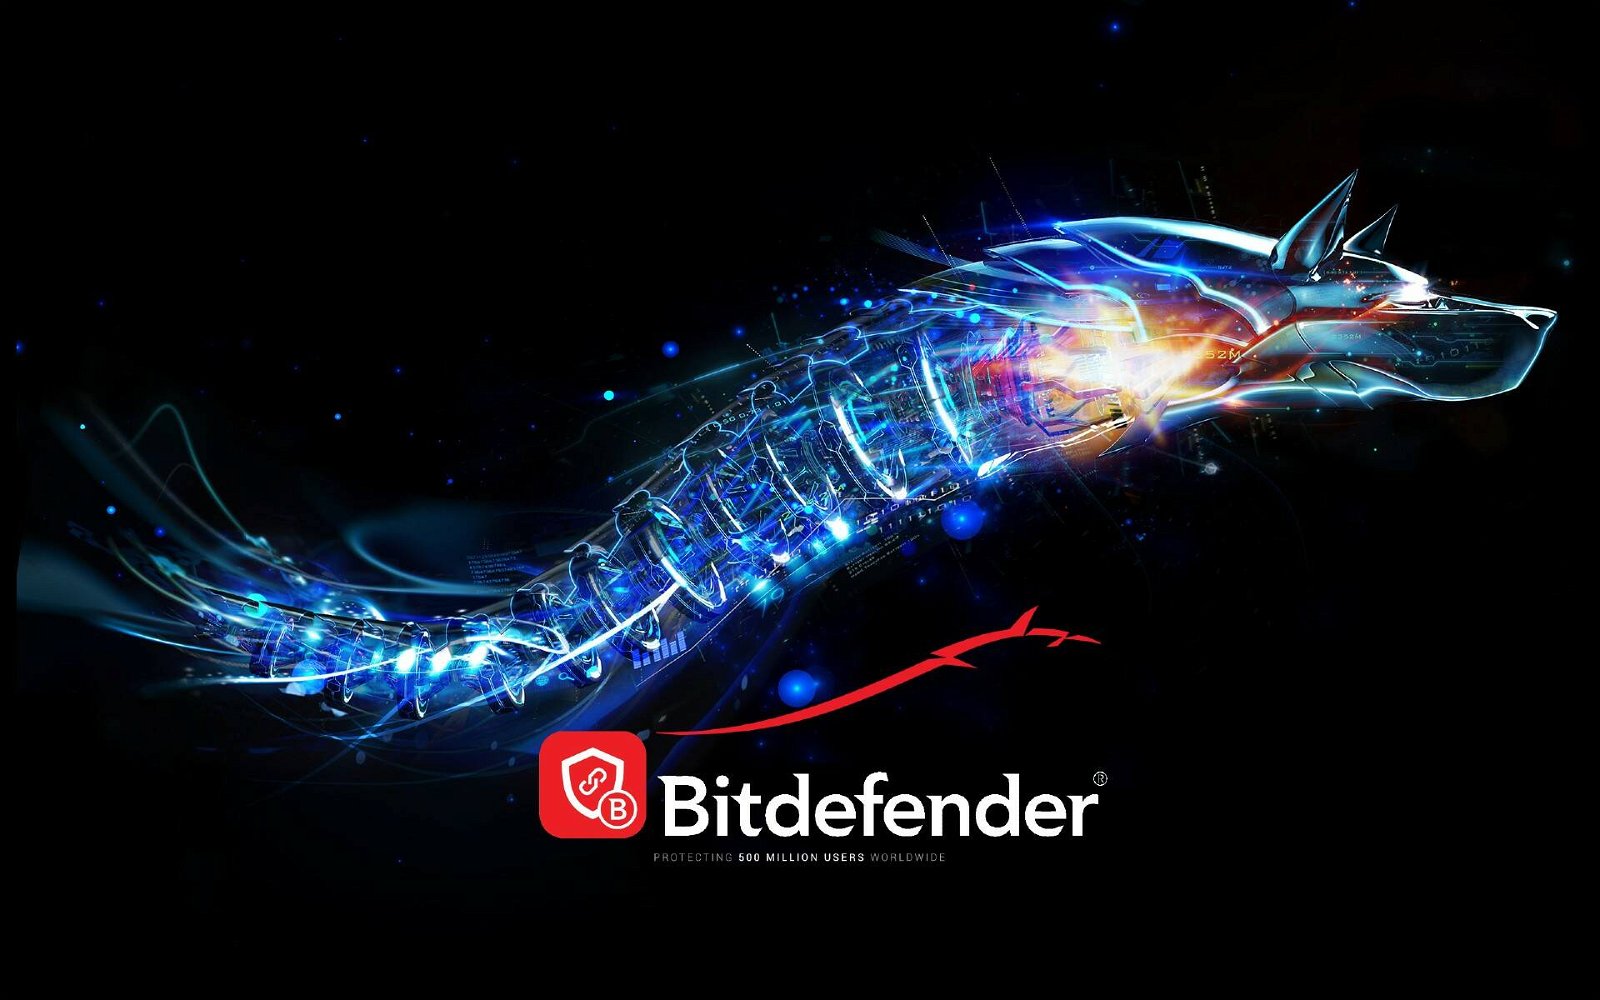 Immagine di Bitdefender Premium VPN - Recensione